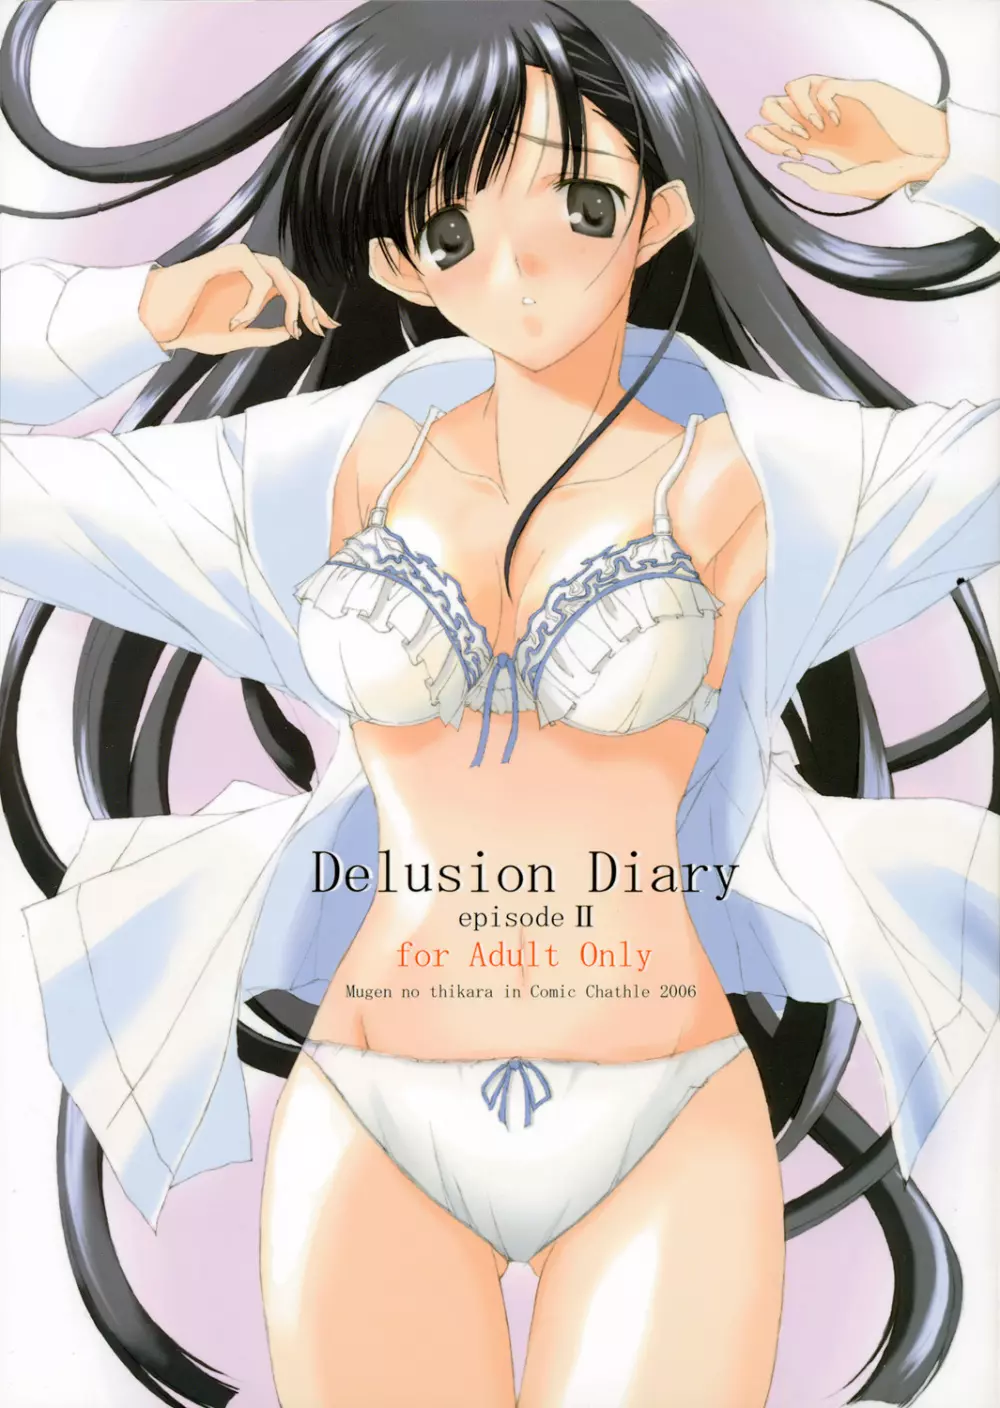 Delision Diary episode Ⅱ